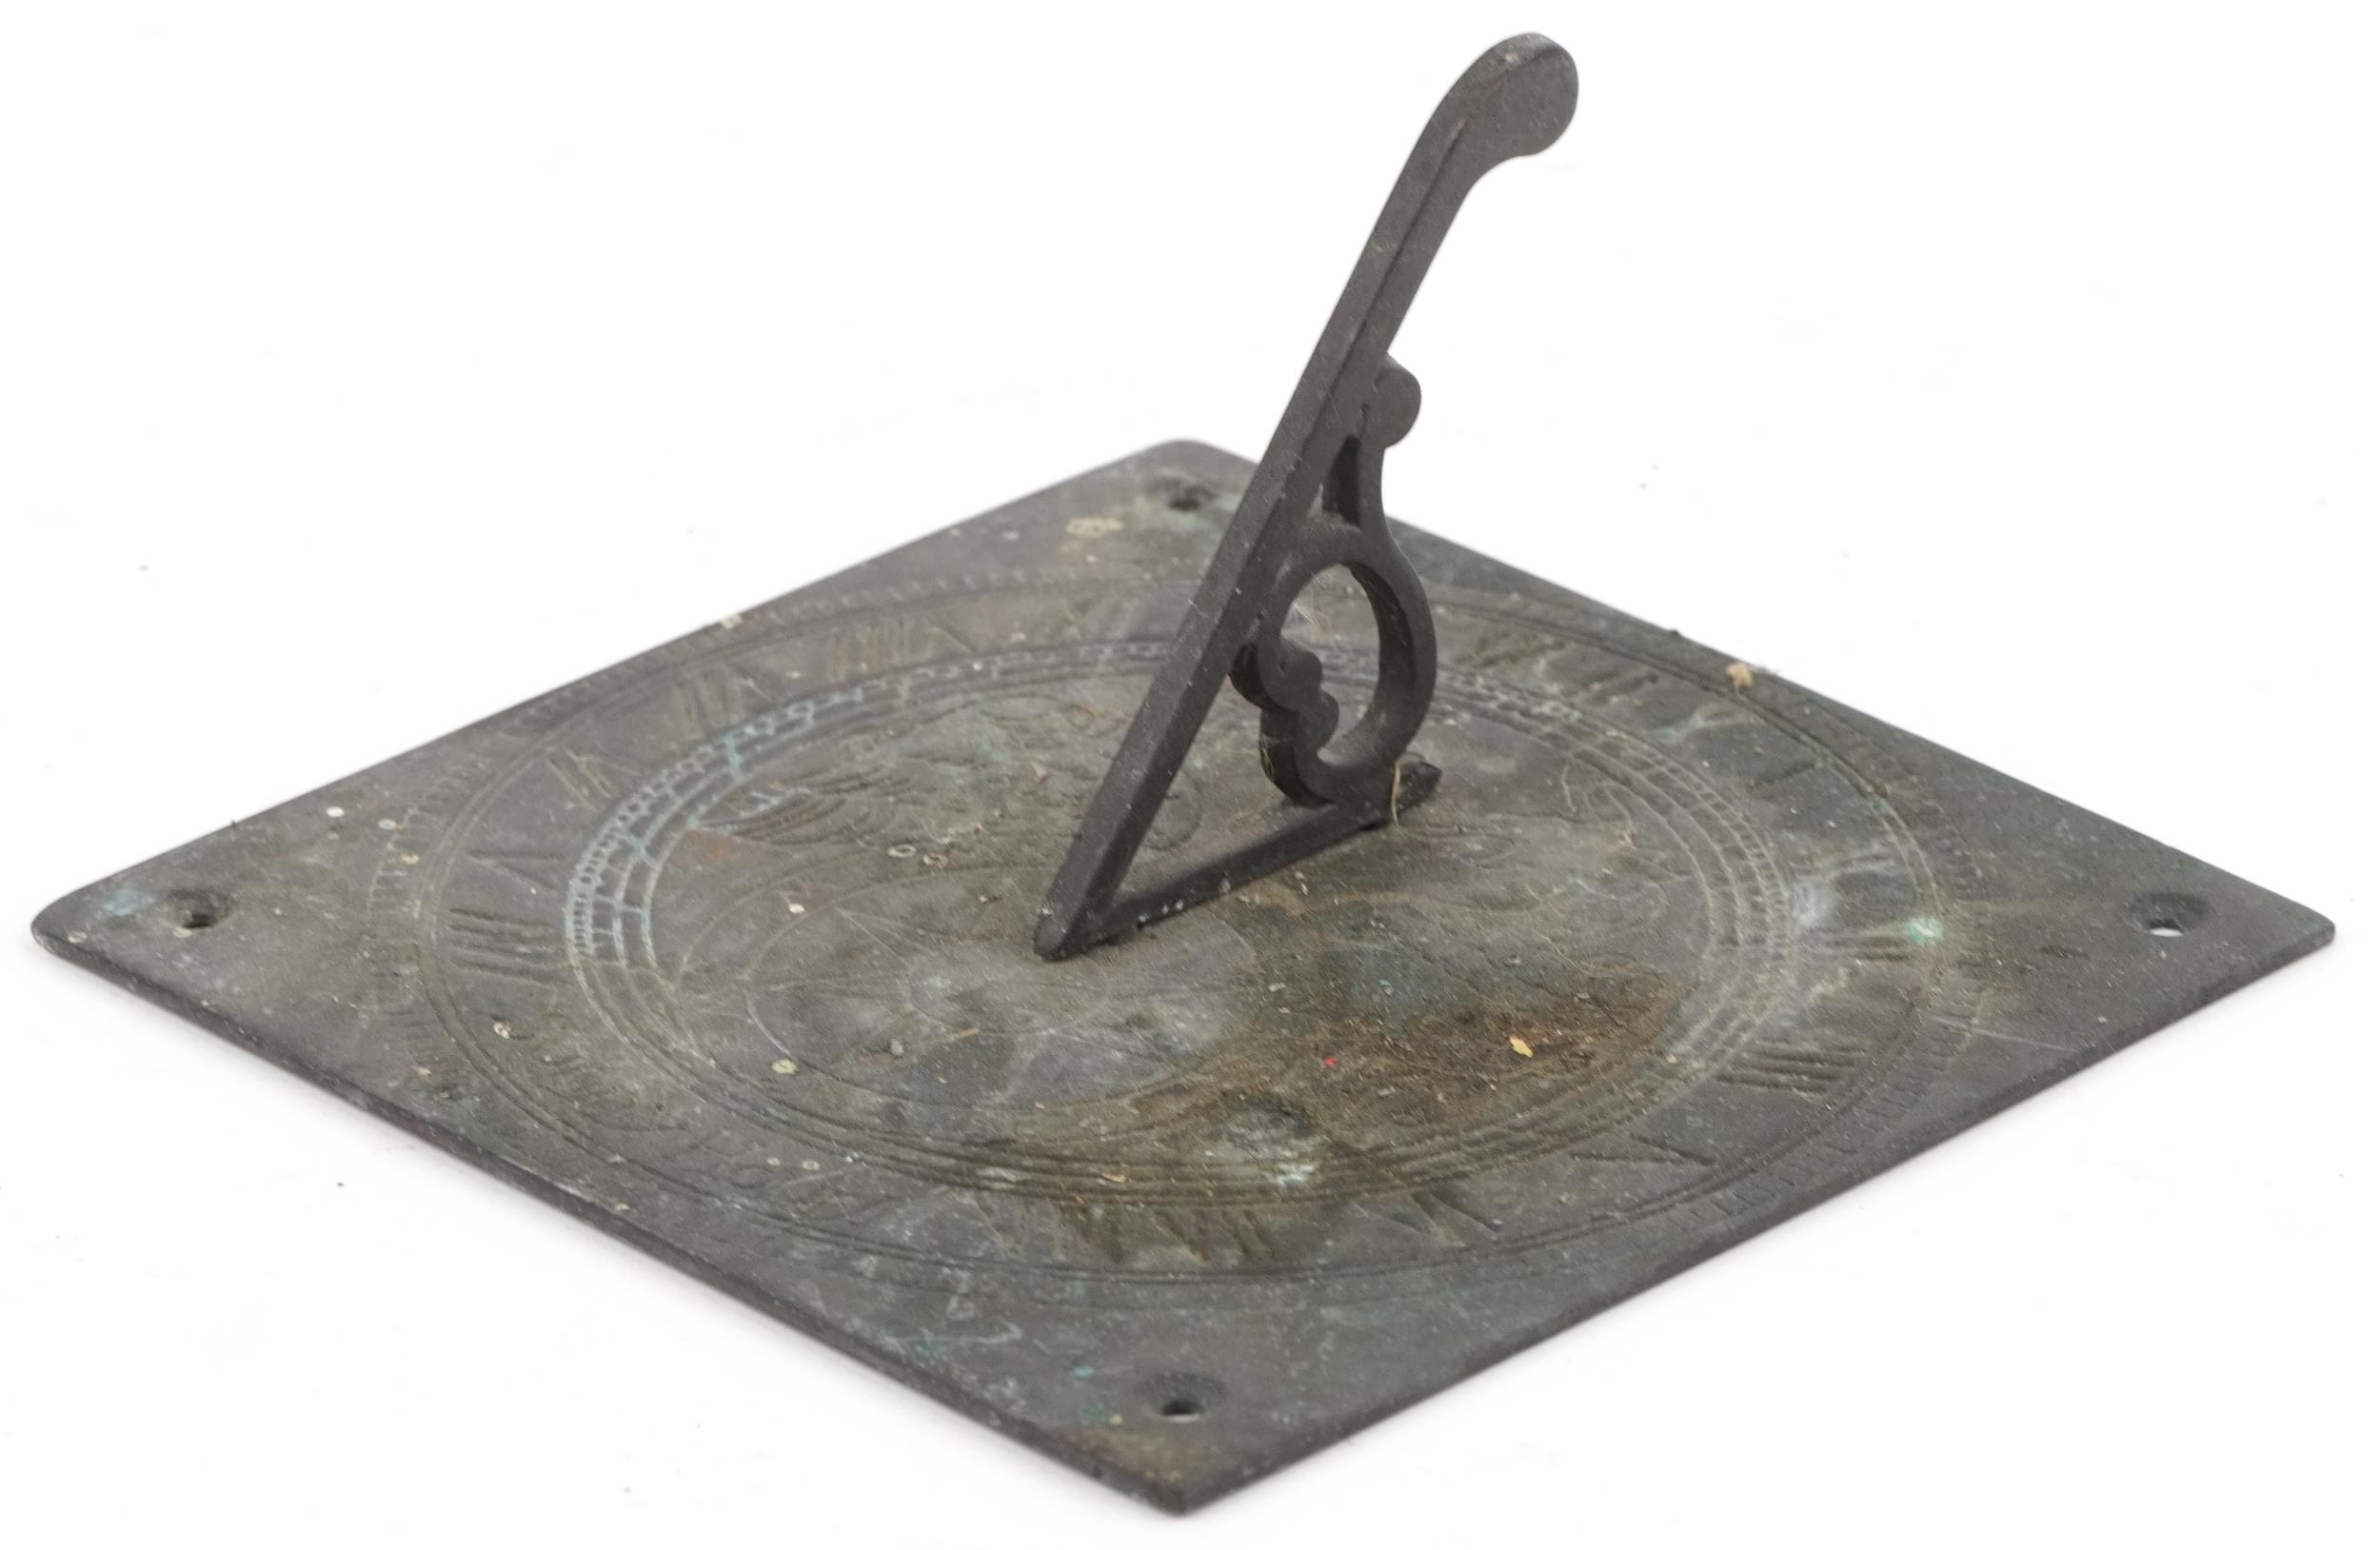 Antique verdigris patinated bronze sundial engraved with griffins, 16cm x 16cm